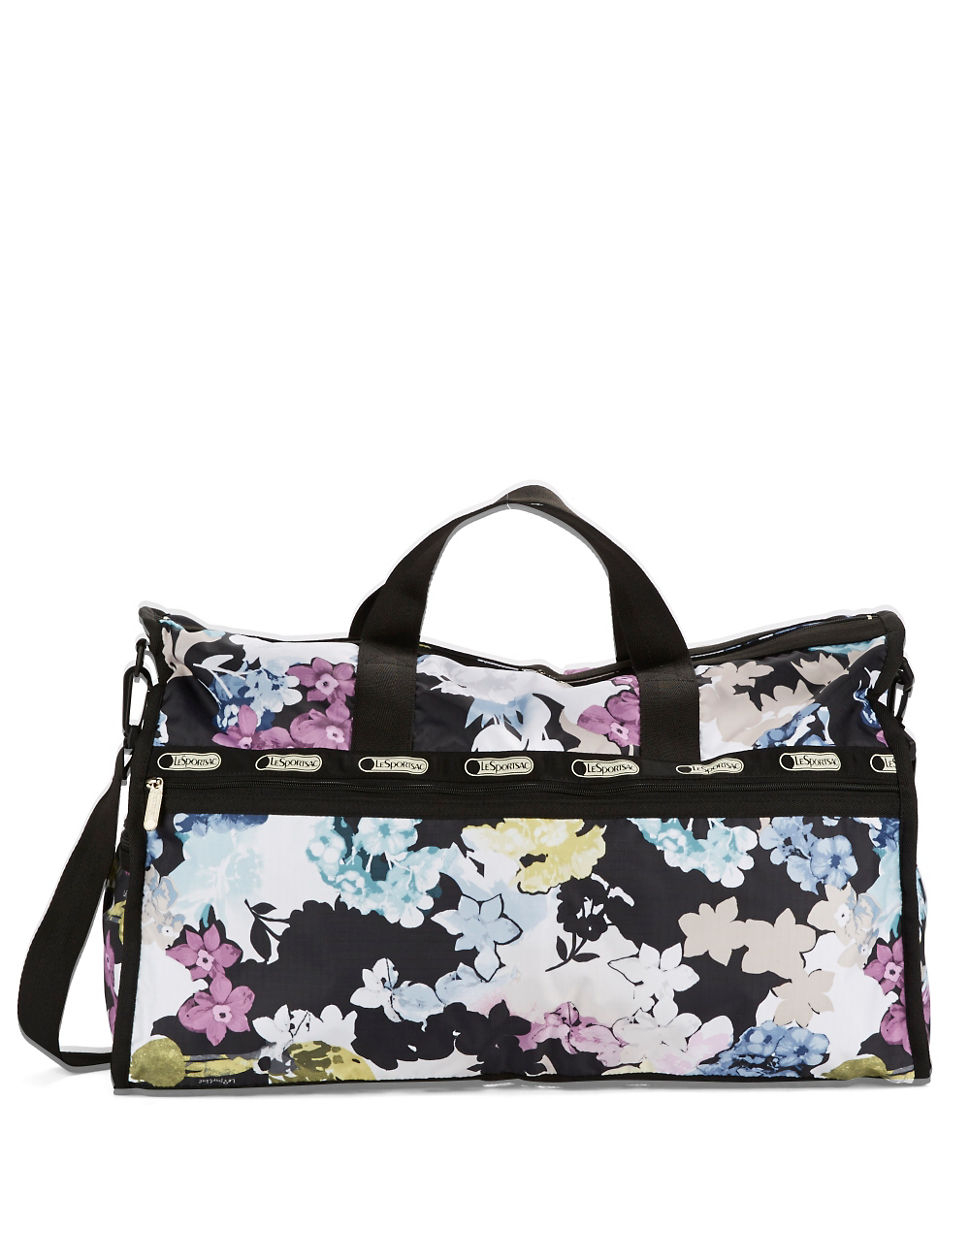 Lyst - Lesportsac Xl Floral-print Weekender Bag